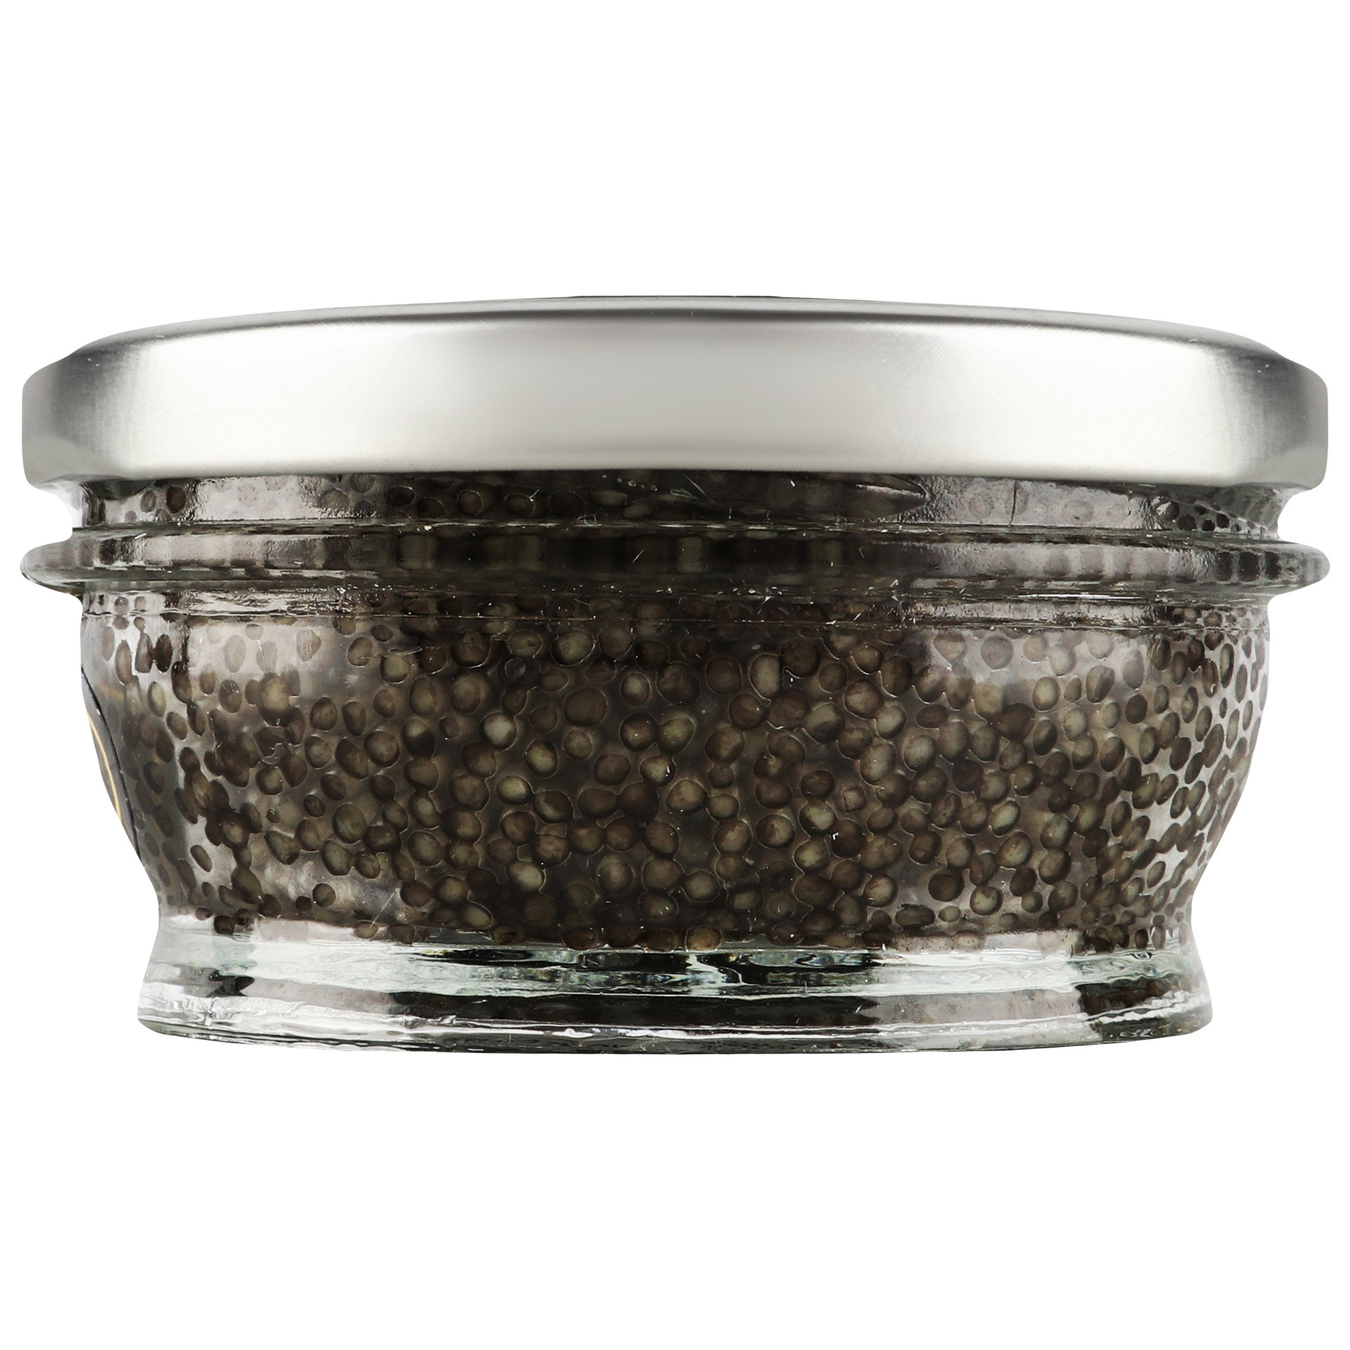 Royal Caviar Classic sturgeon granular caviar 100g 2